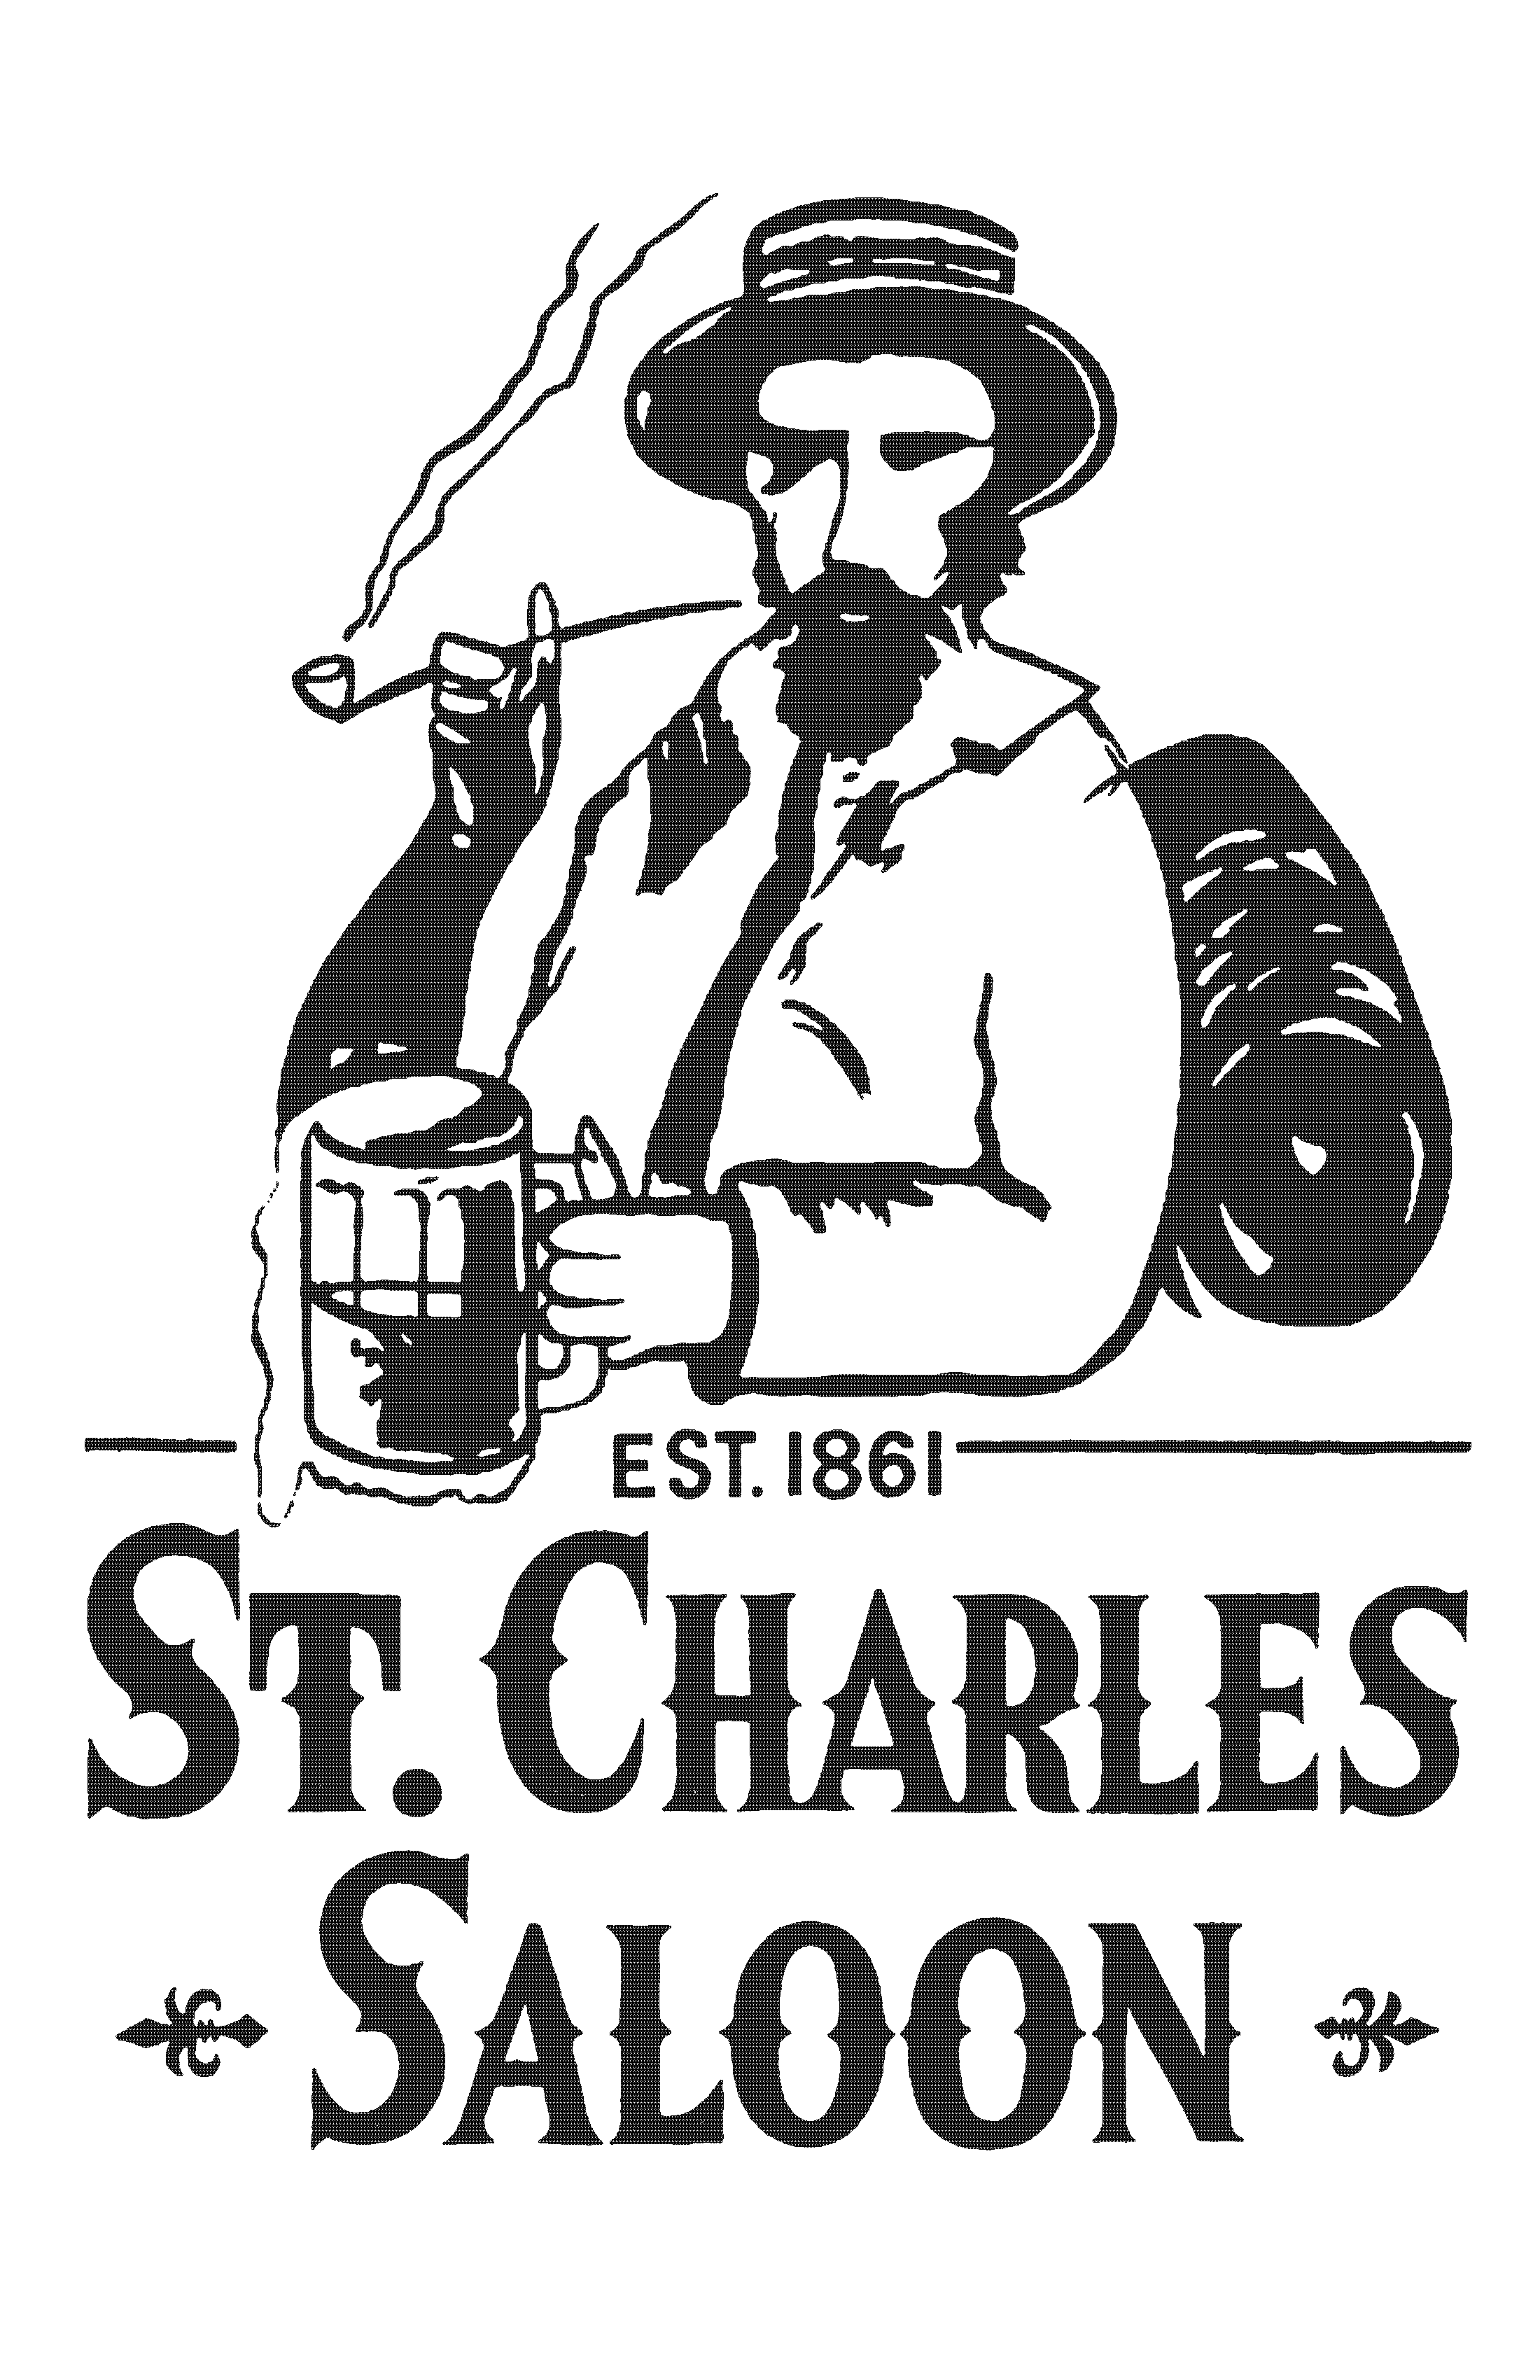 St. Charles Saloon